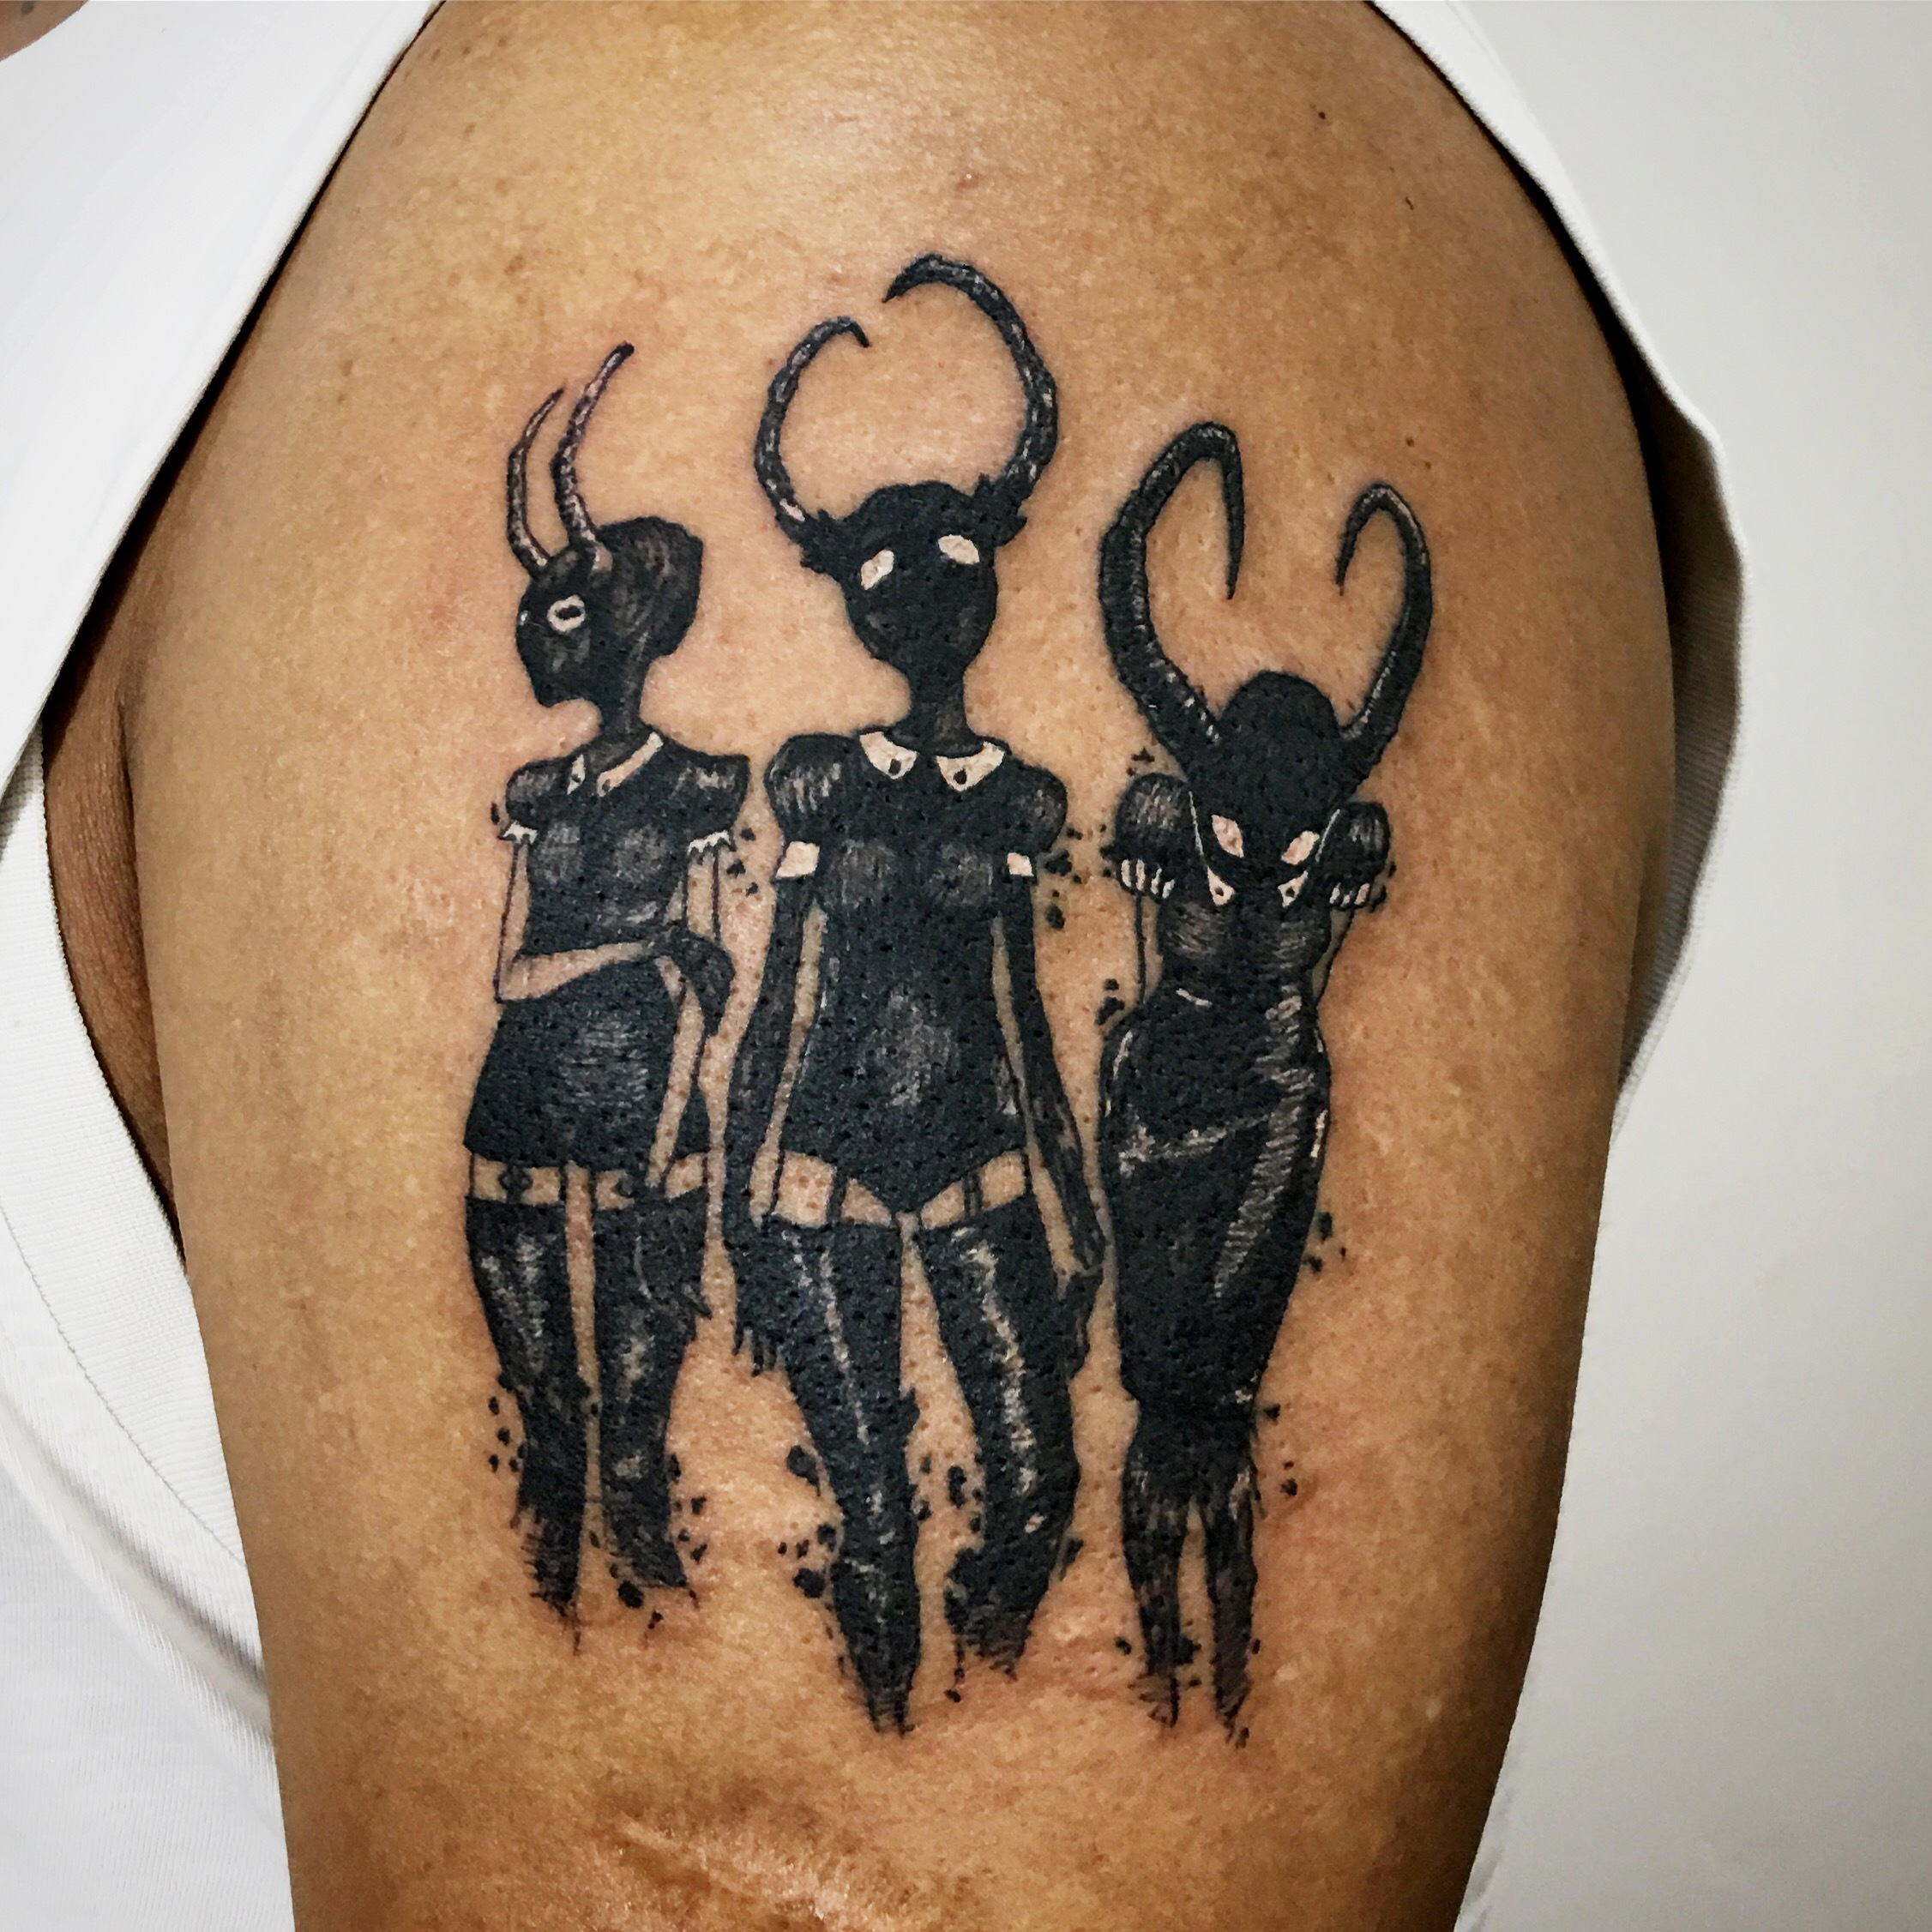 Demon Tattoo | Tattoos for guys, Cool tattoos, Tattoos